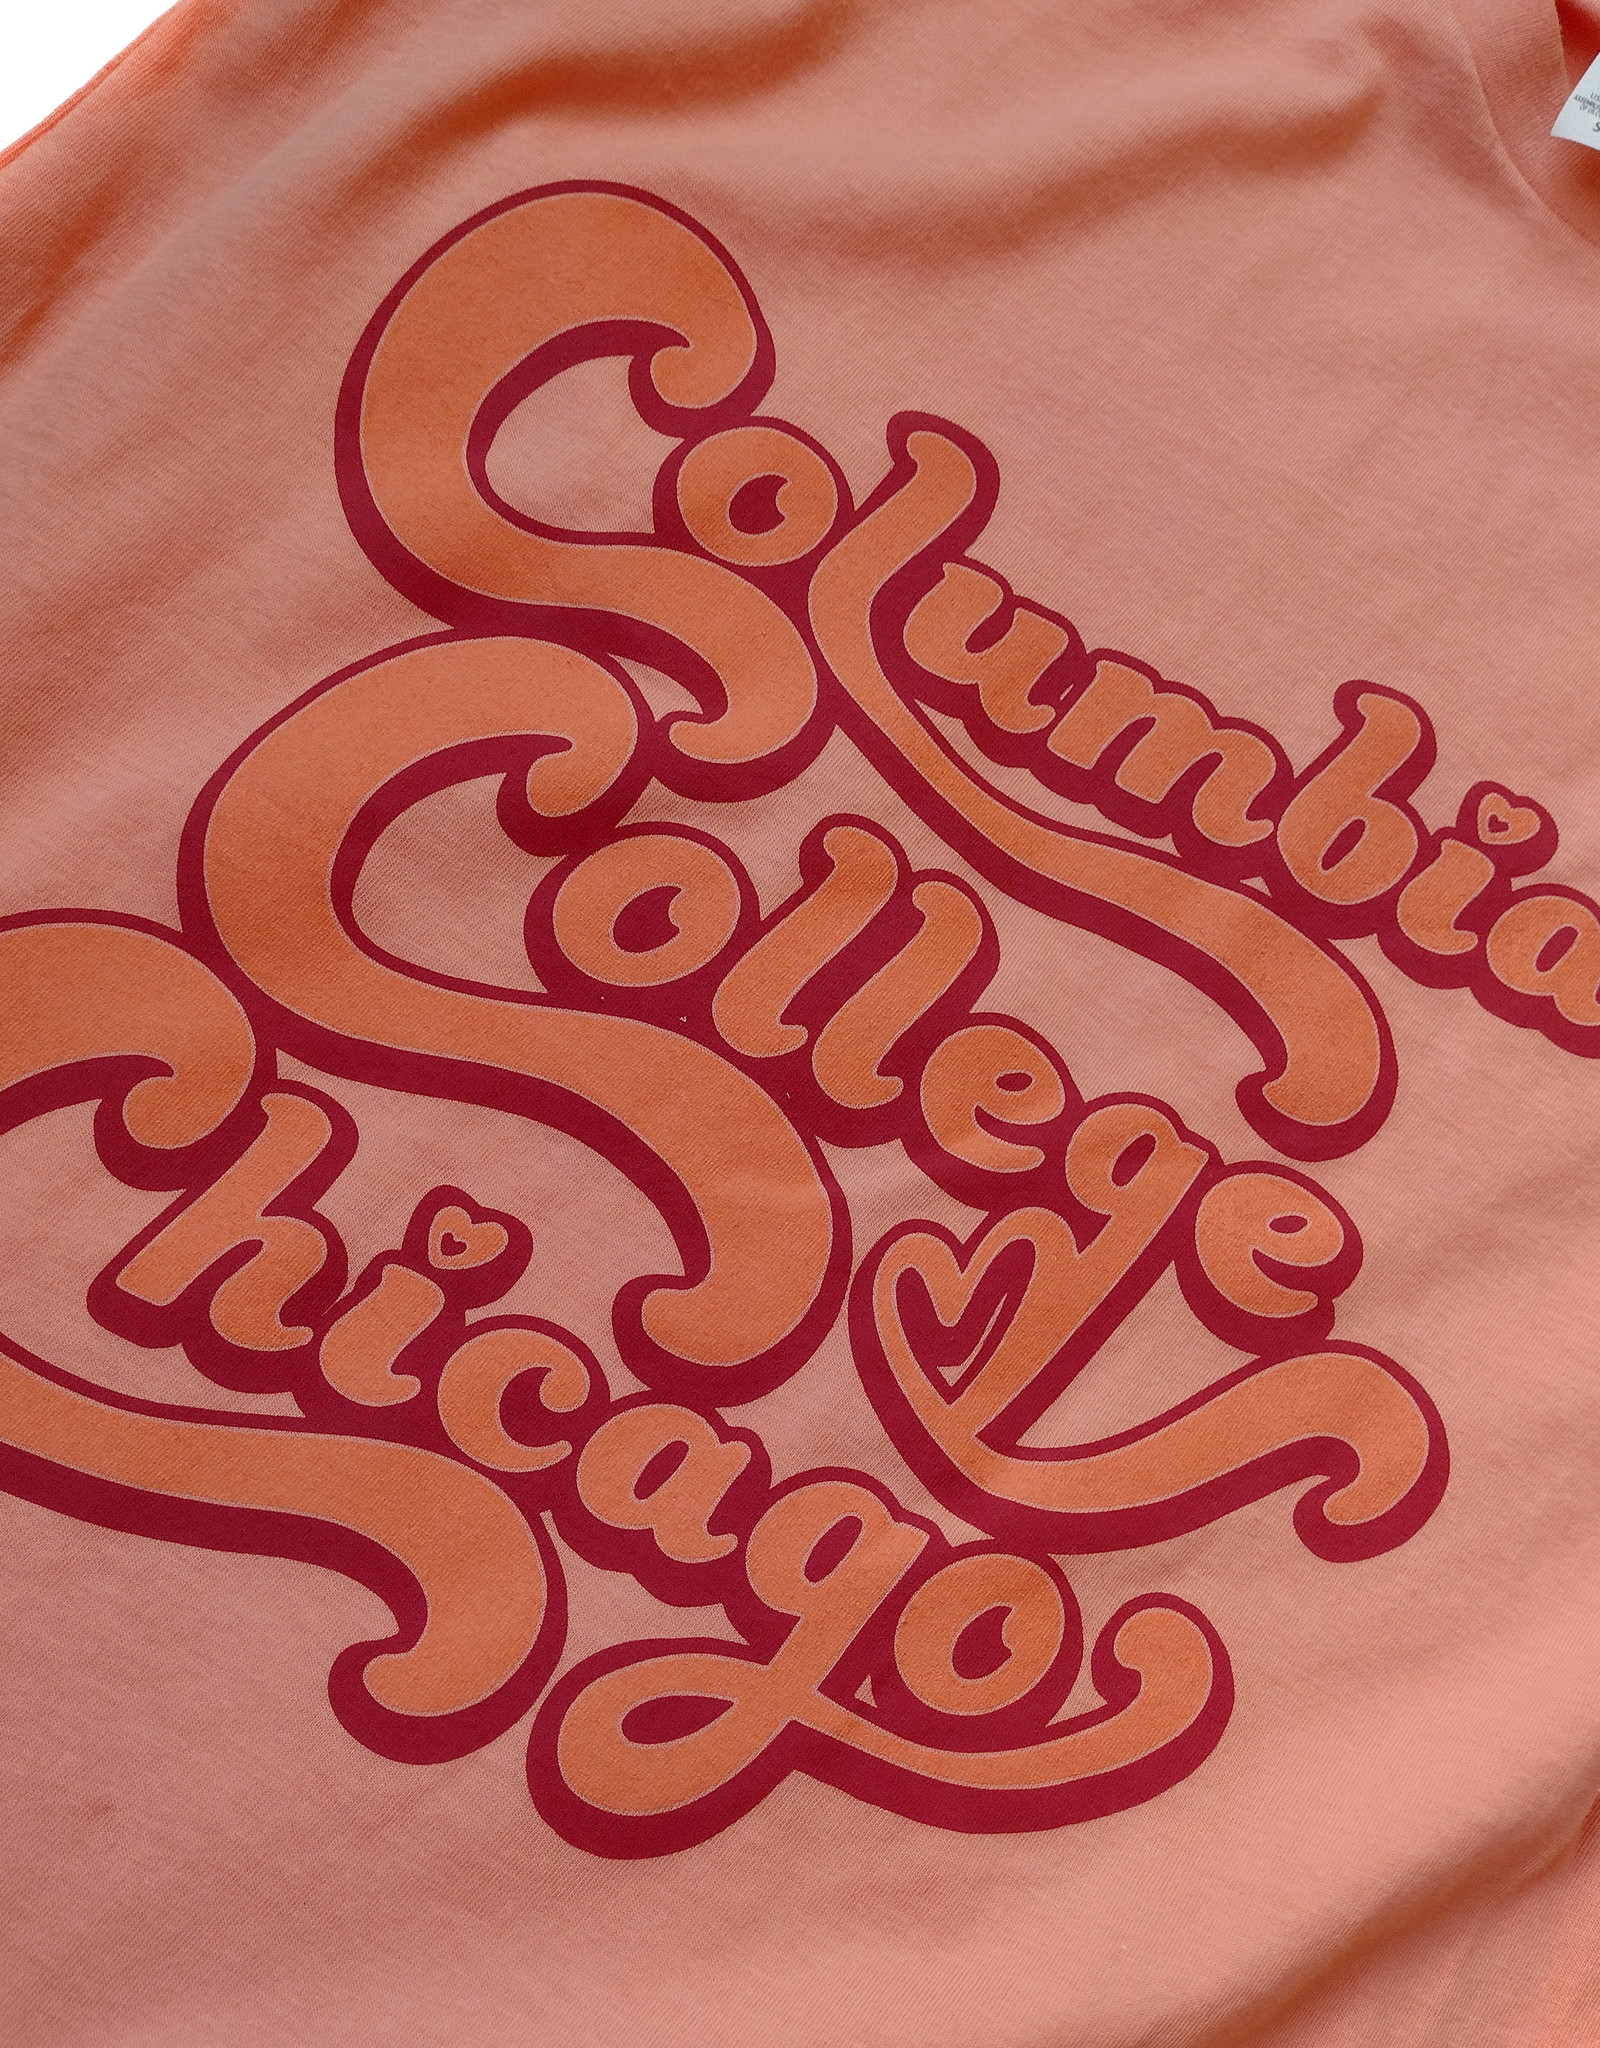 Buy Columbia, By Columbia Peach Columbia T-Shirt